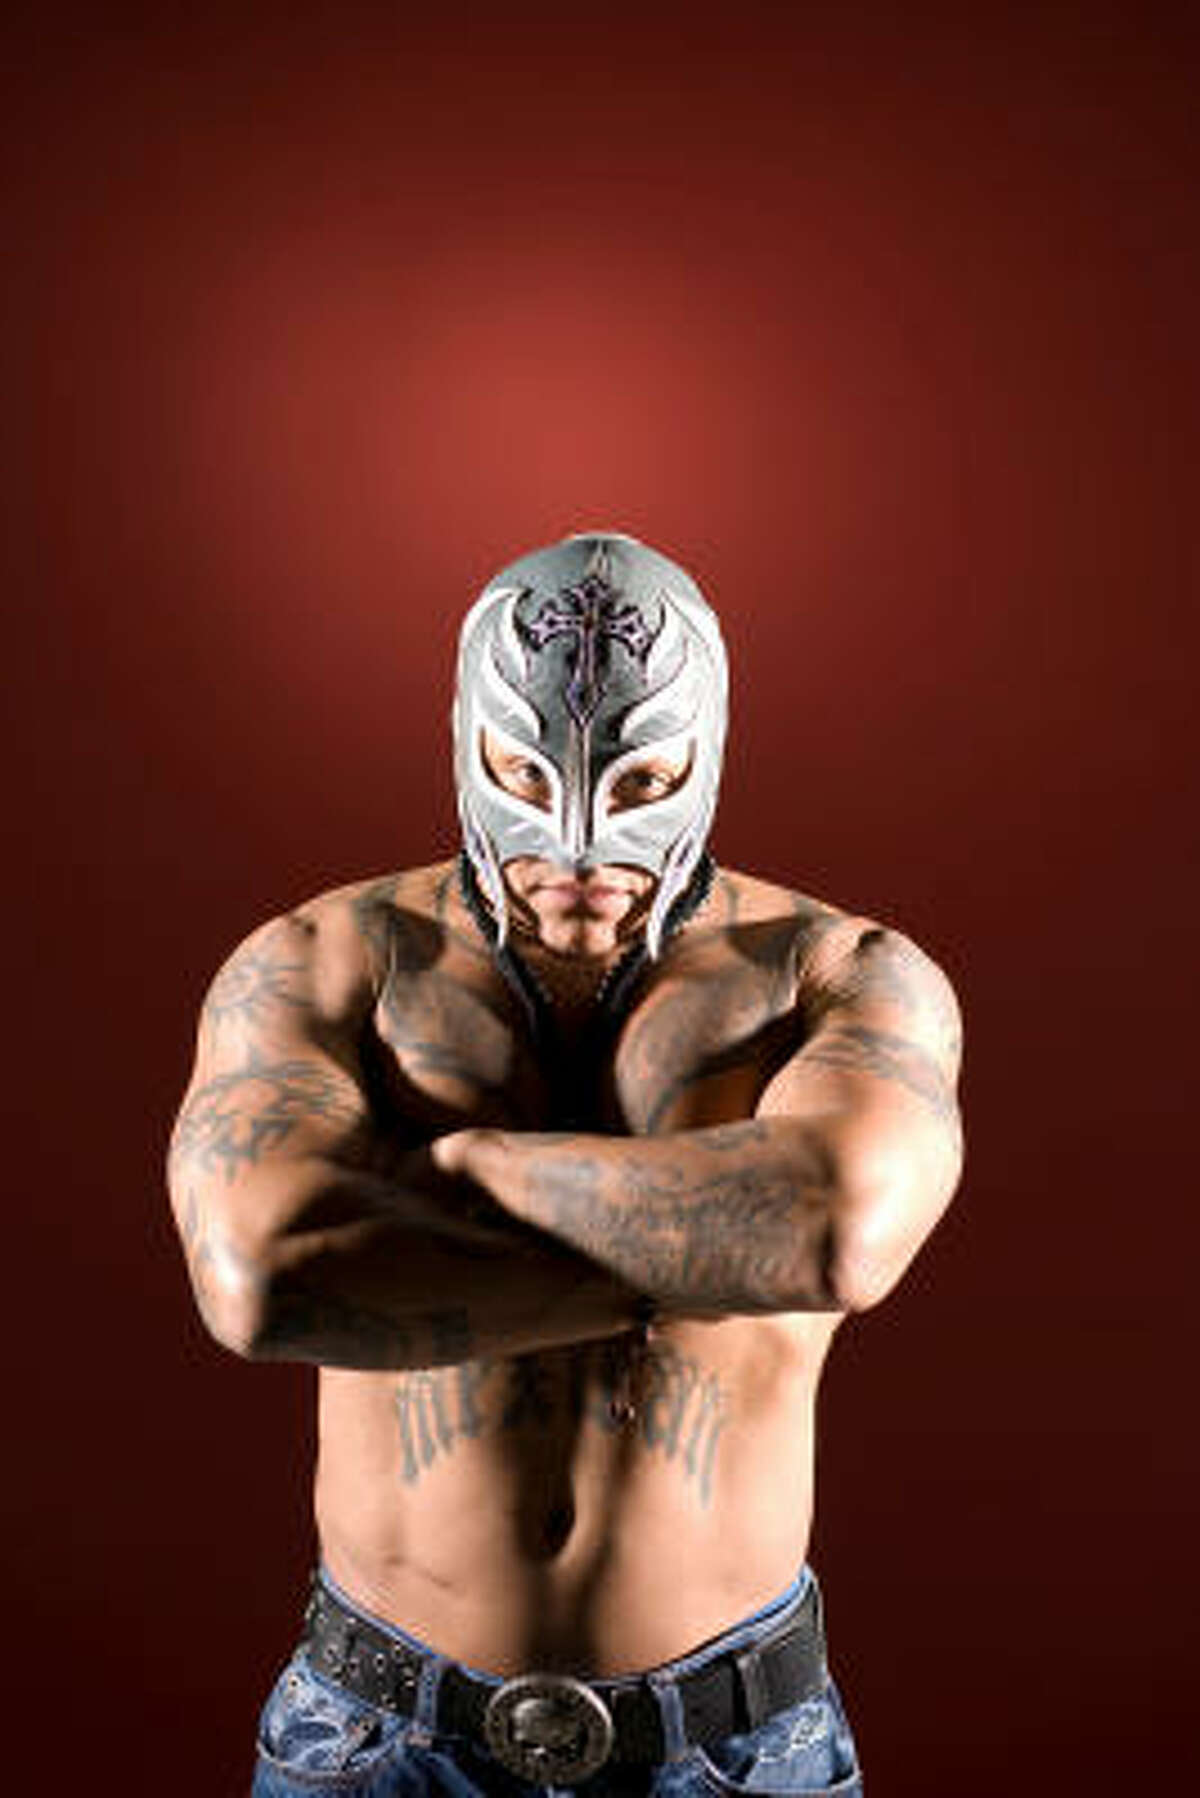 WWE wrestler Rey Mysterio.